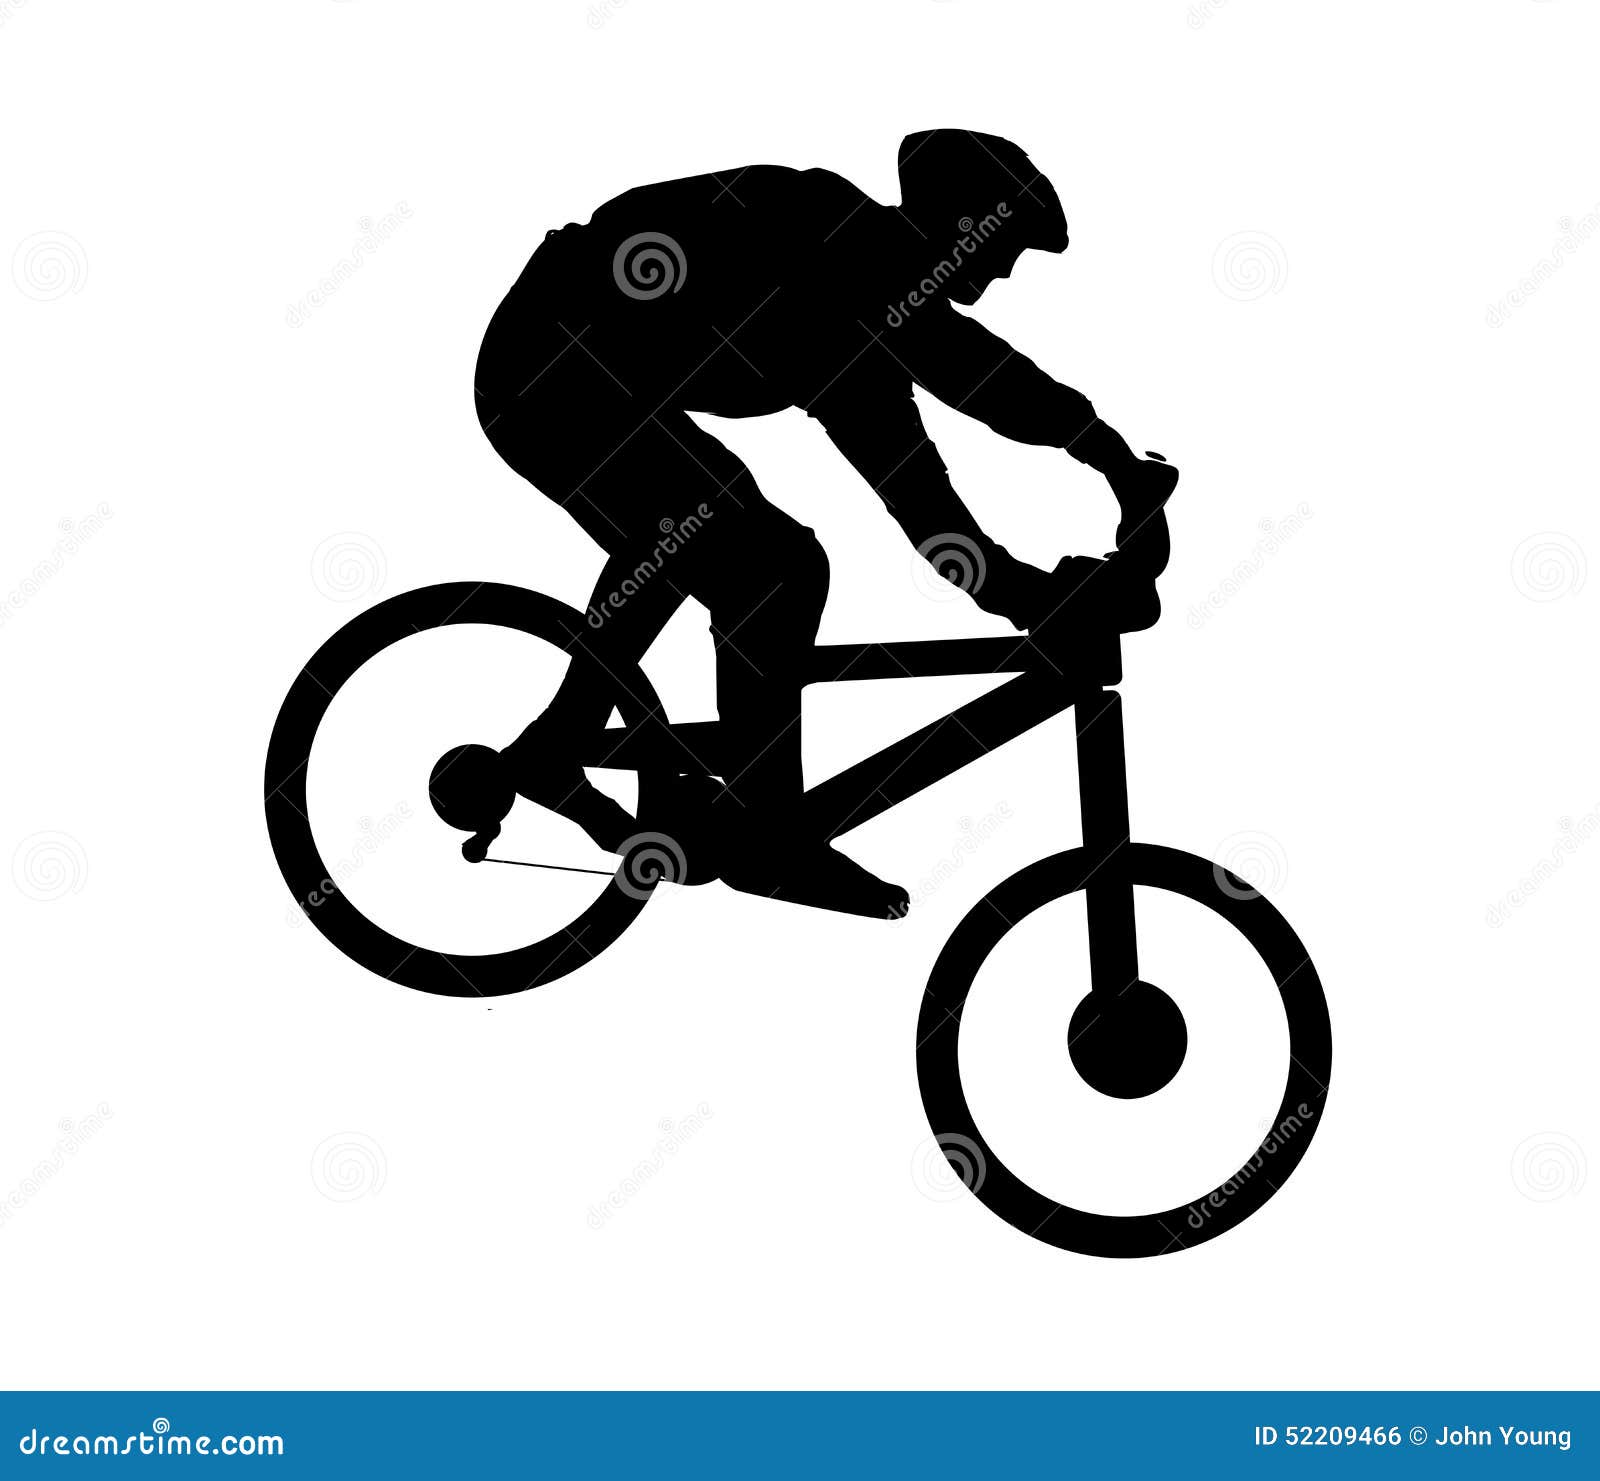 mountain bike clip art silhouette - photo #7